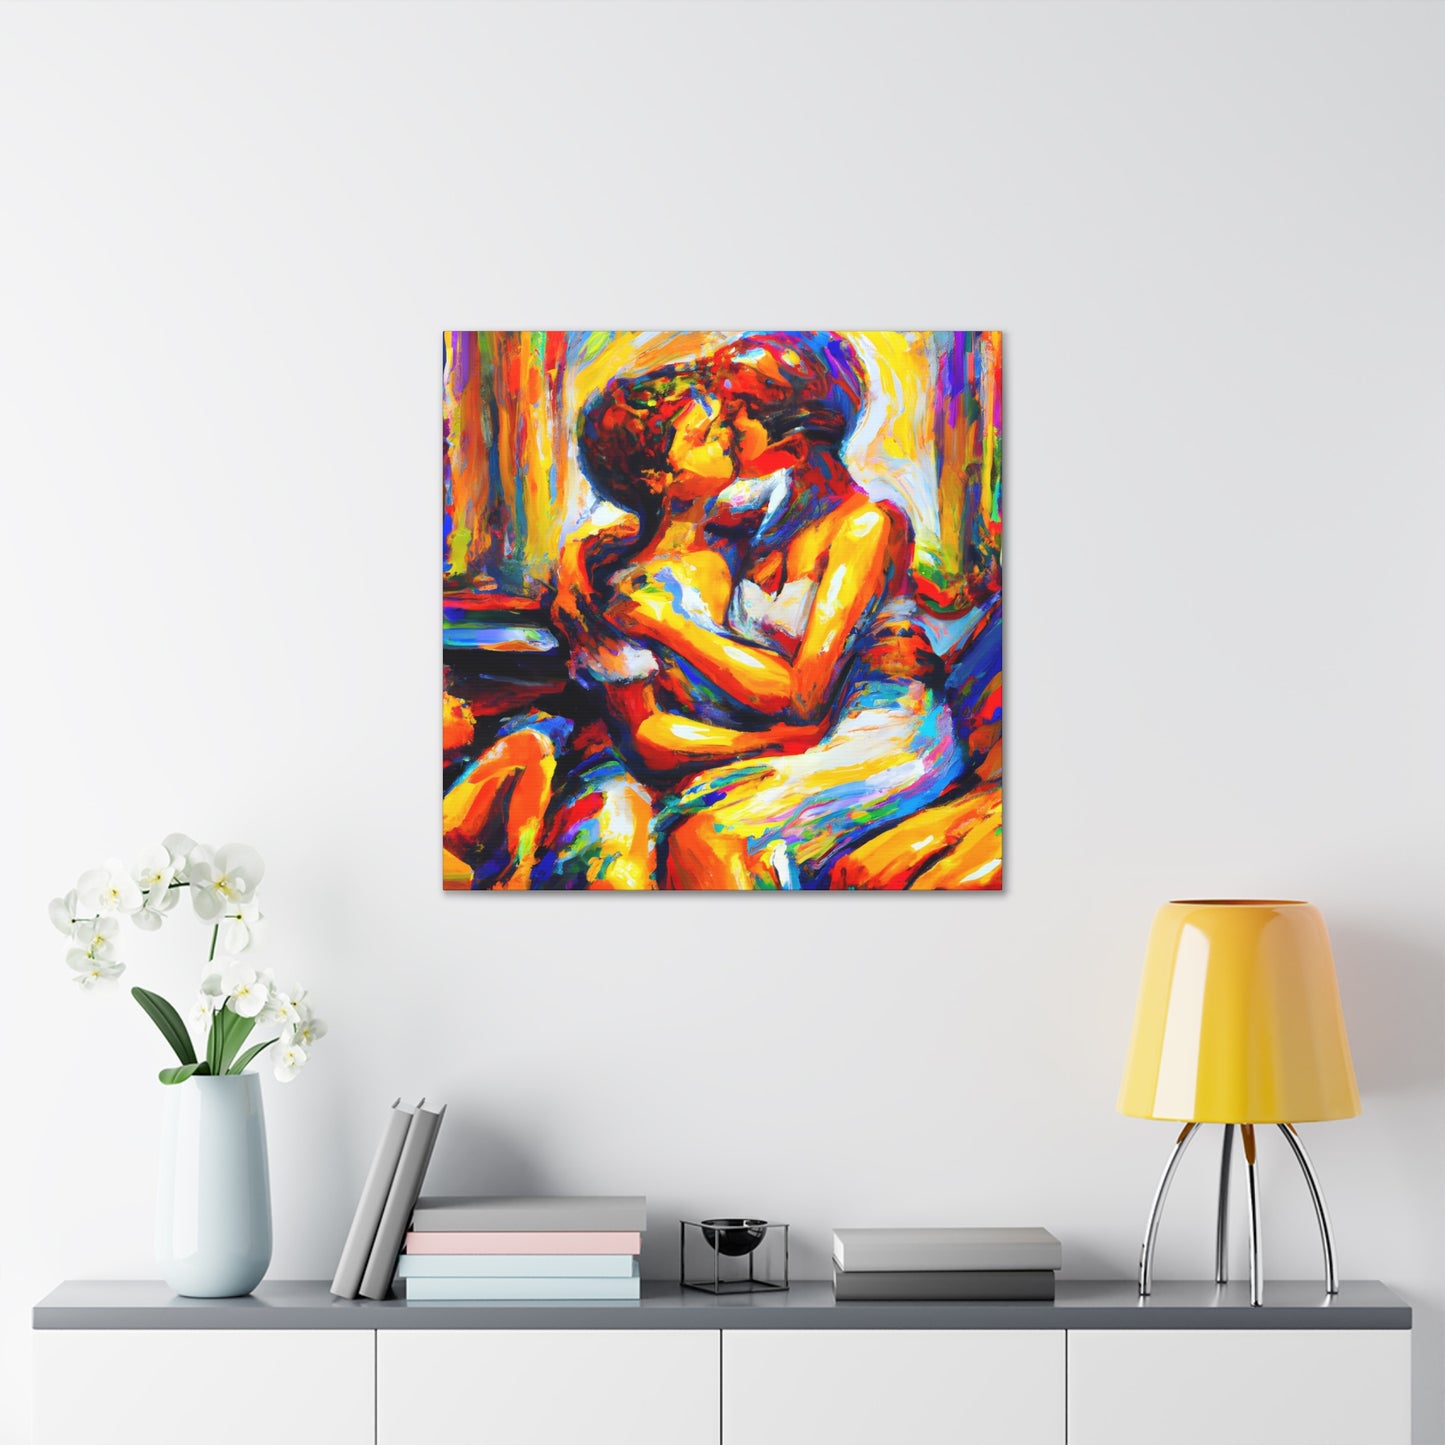 Adam - Gay Love Canvas Art